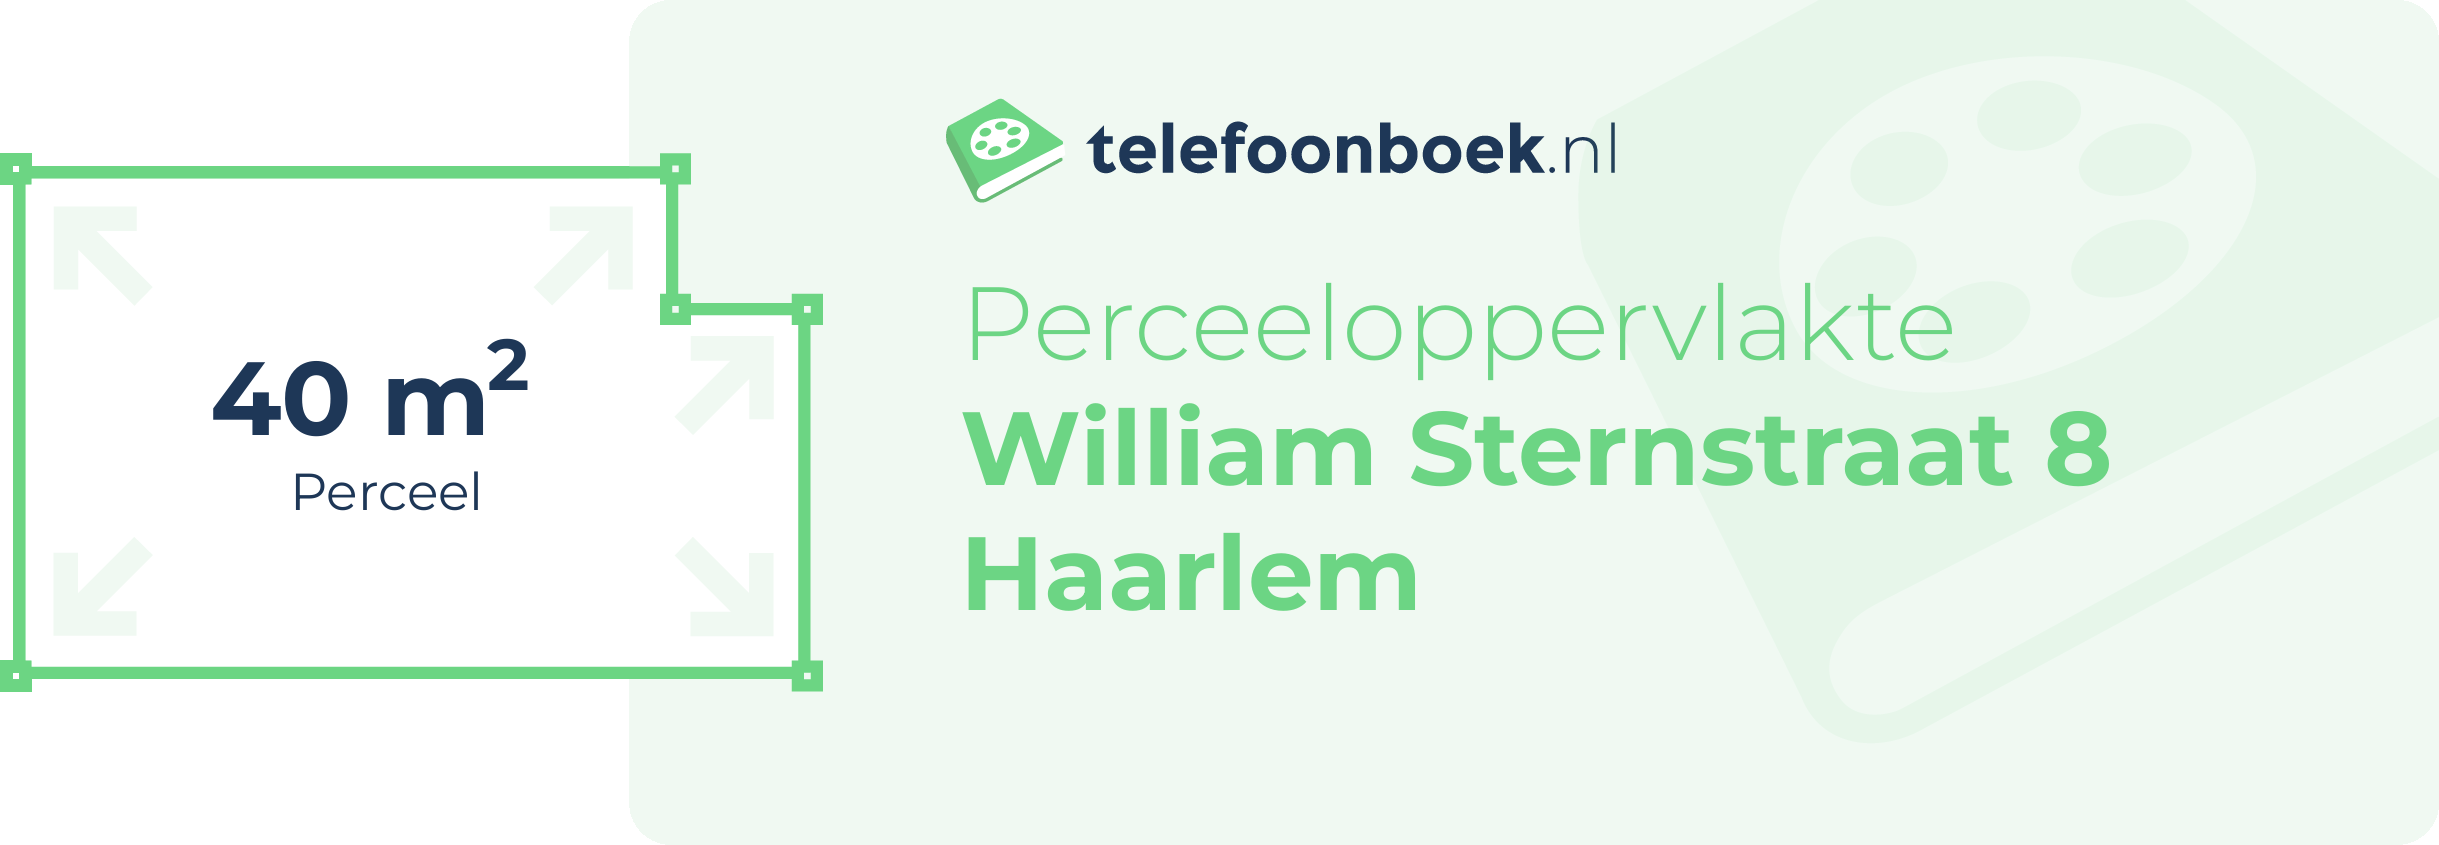 Perceeloppervlakte William Sternstraat 8 Haarlem